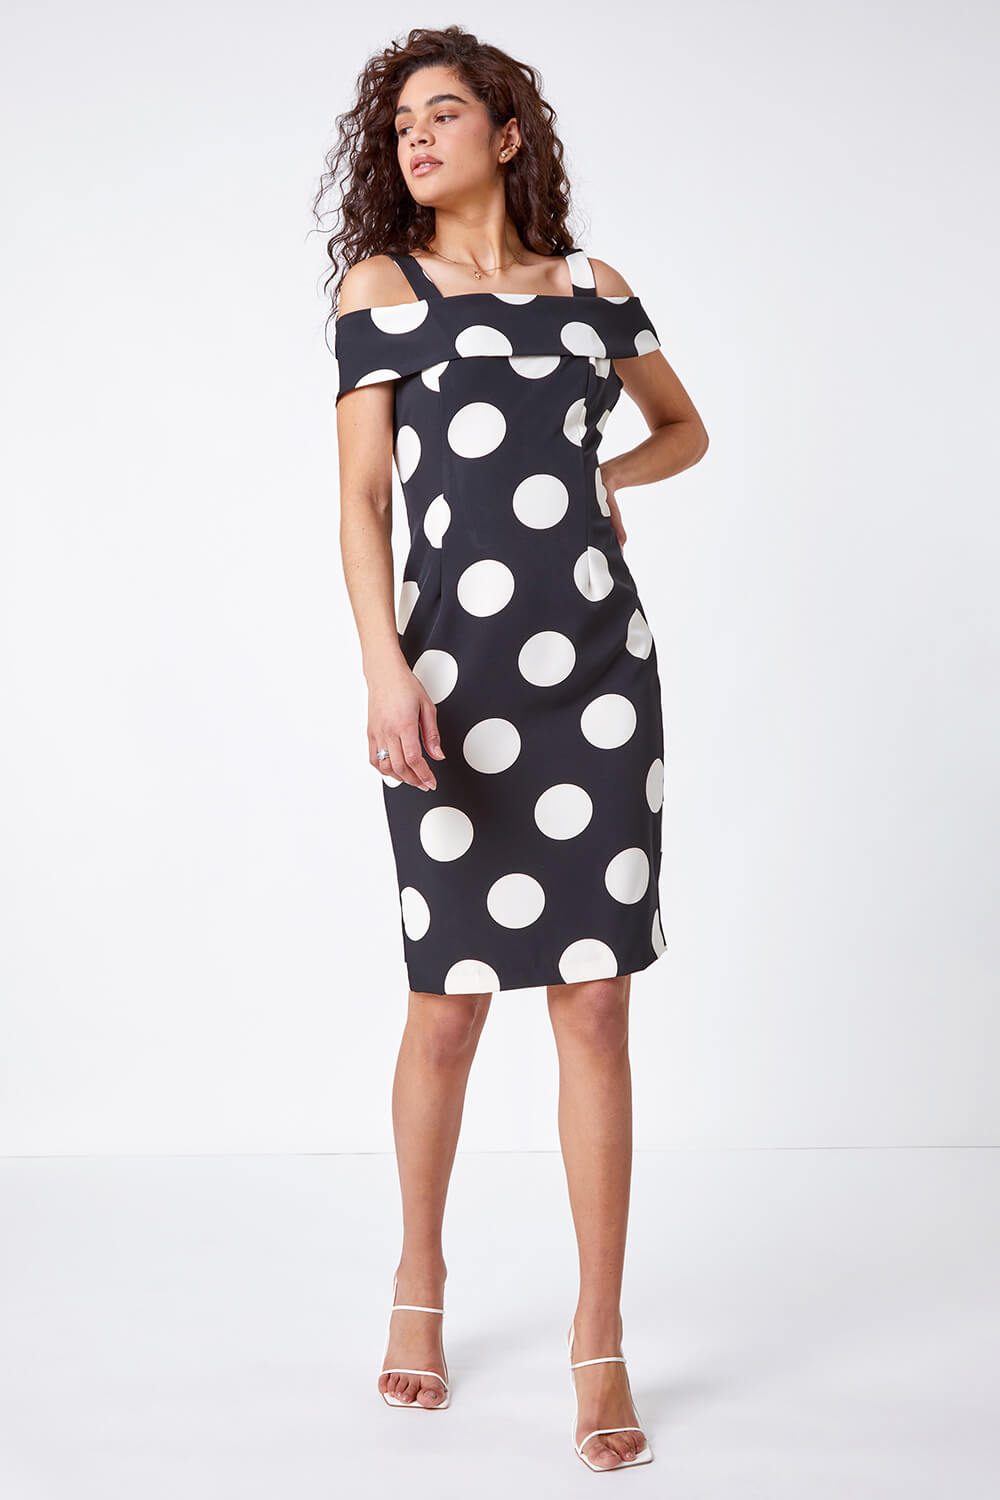 Black Polka Dot Bardot Dress, Image 2 of 5